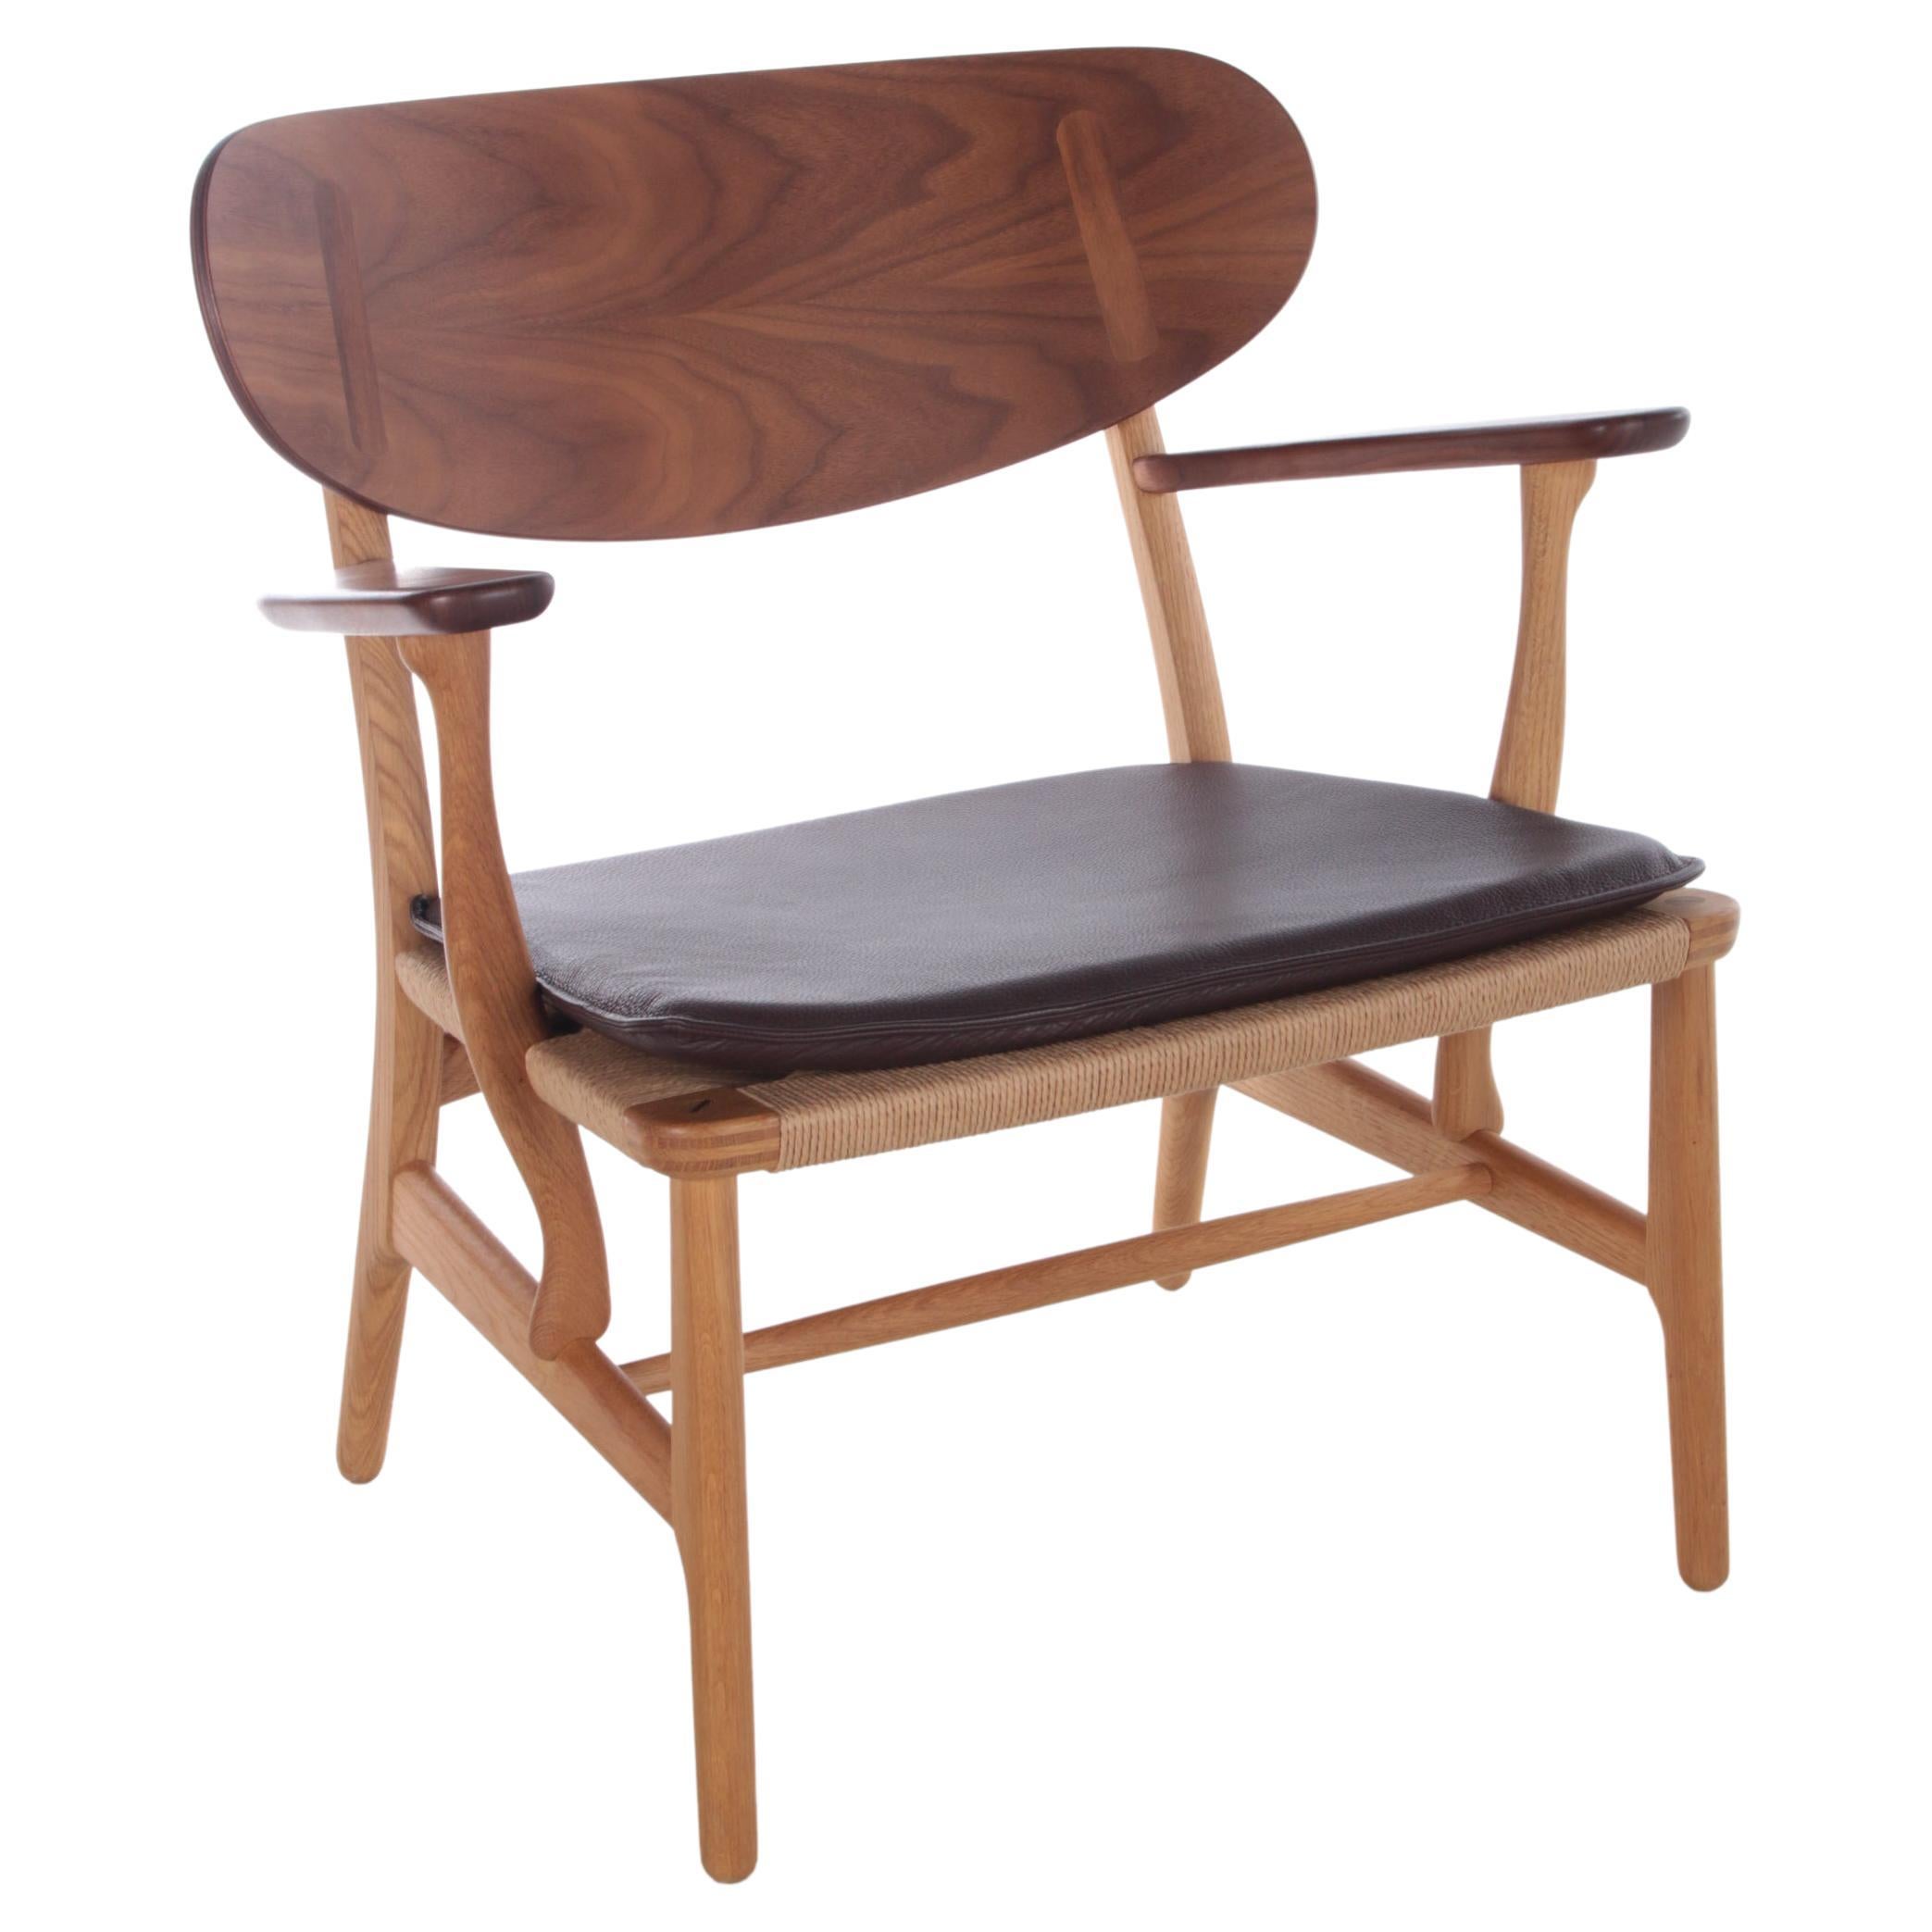 Model Ch22 Lounge Chair by Hans J. Wegner for Carl Hansen & Søn